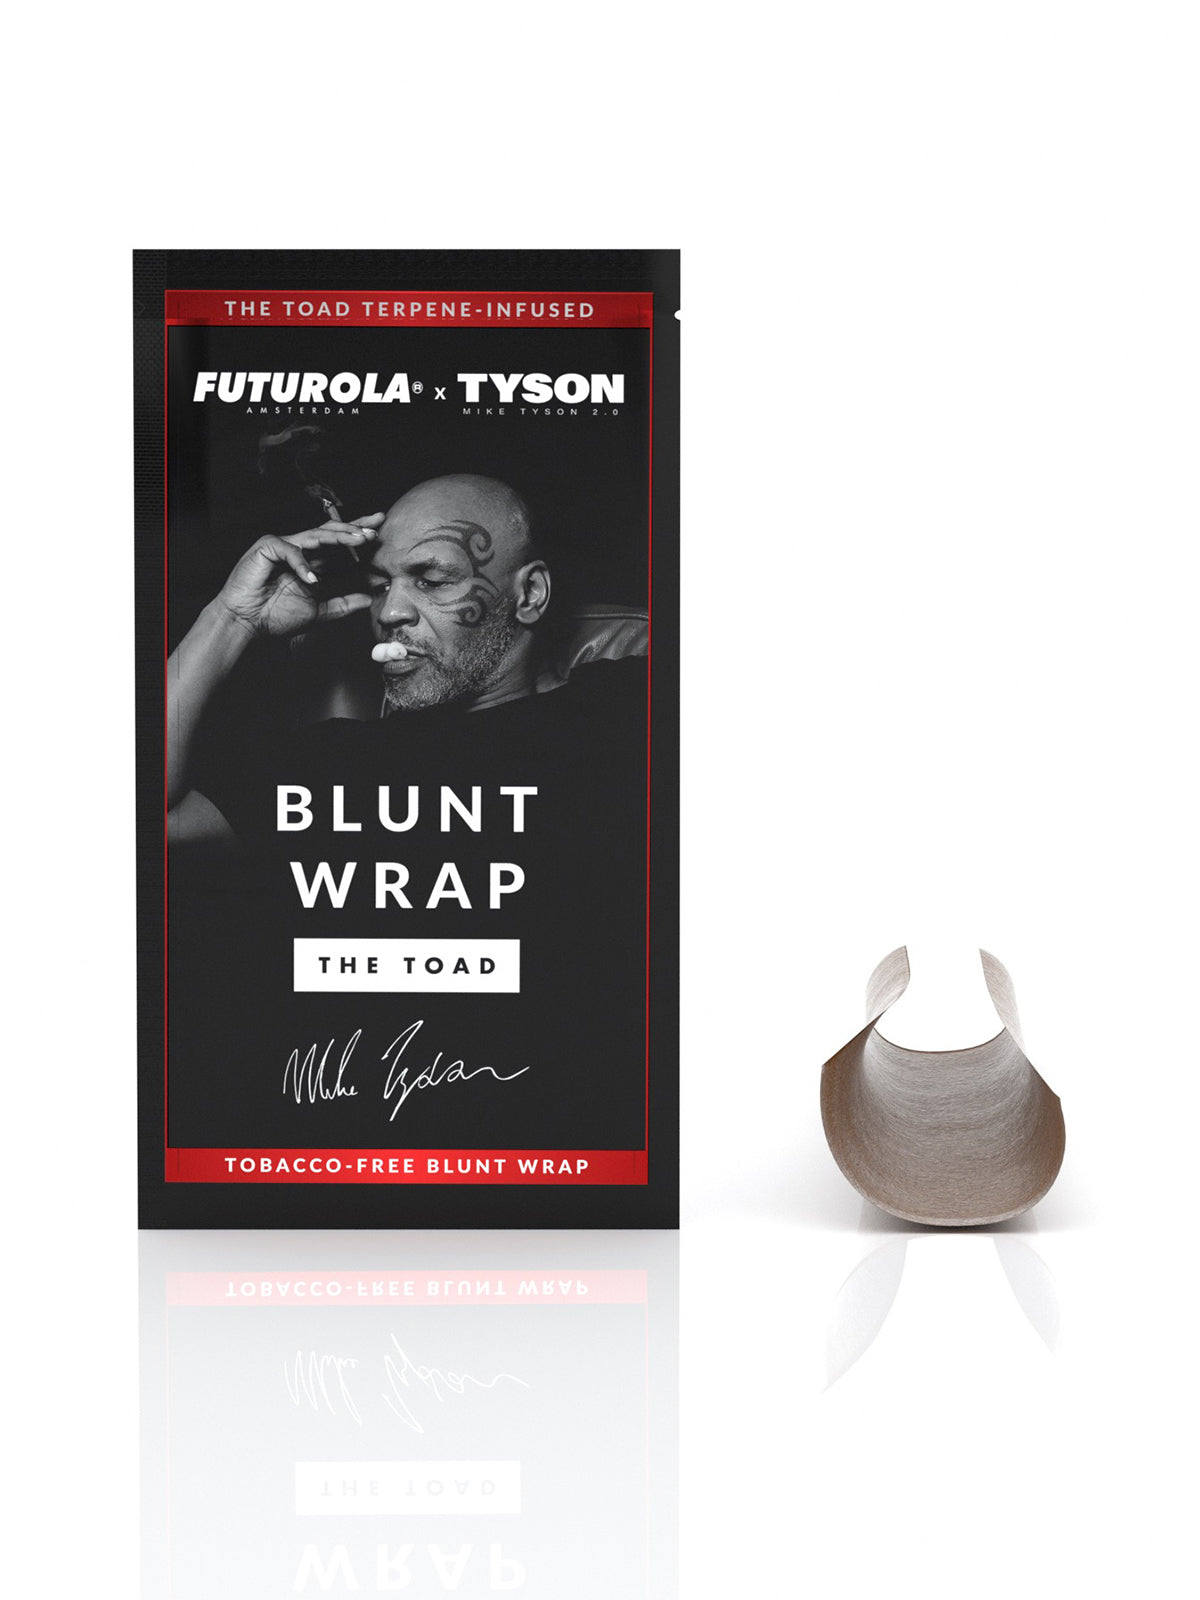 Mike Tyson 2.0 x Futurola "The Toad" Blunt Wrap 5-Pk Smoke Drop 